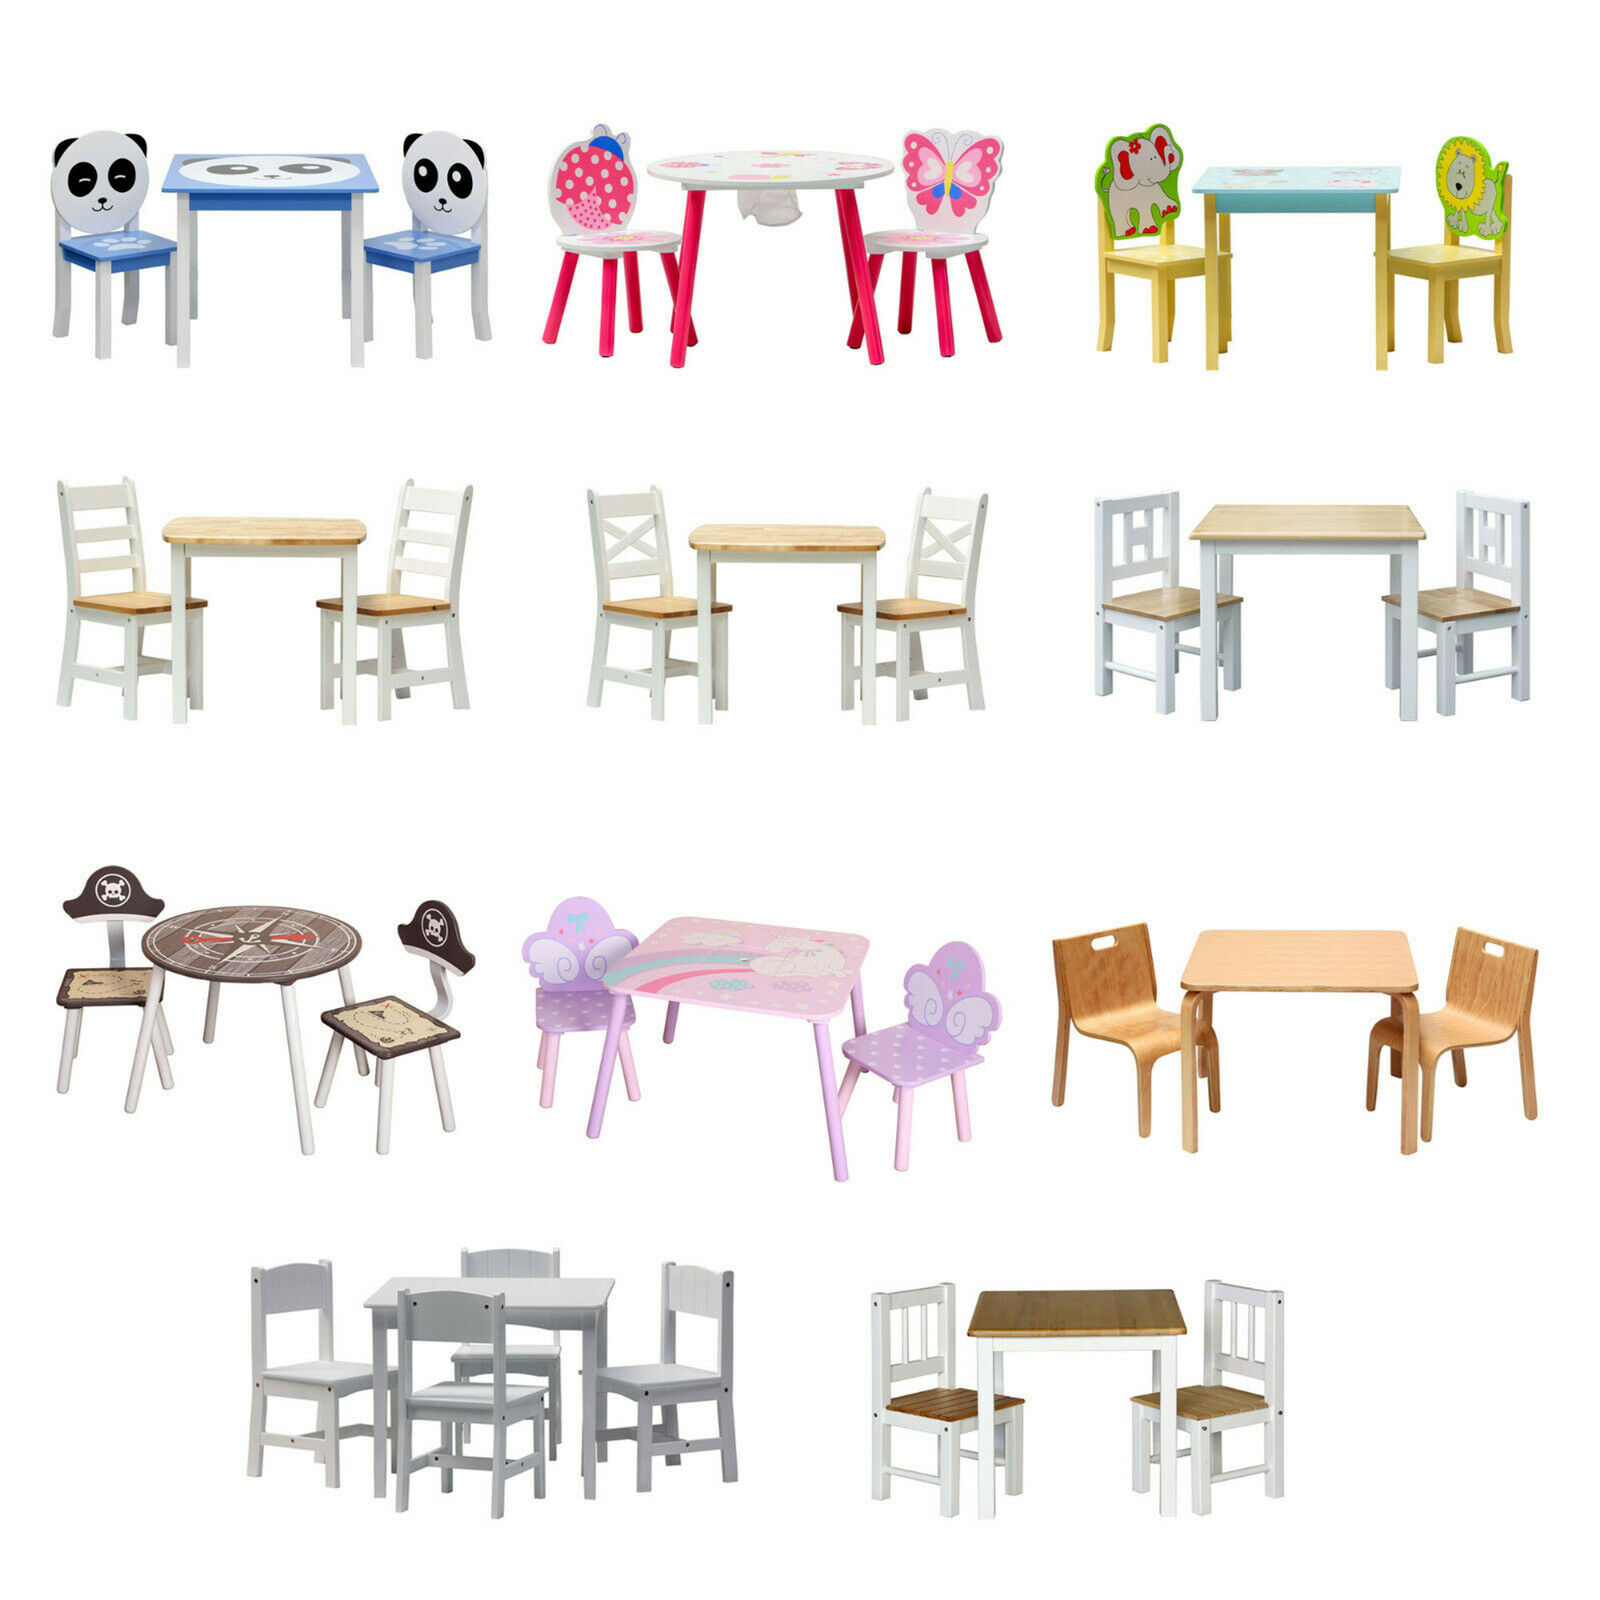 ib style® - Kindersitzgruppe Tischset Kindermöbel Kindertisch Kinderstuhl Holz 